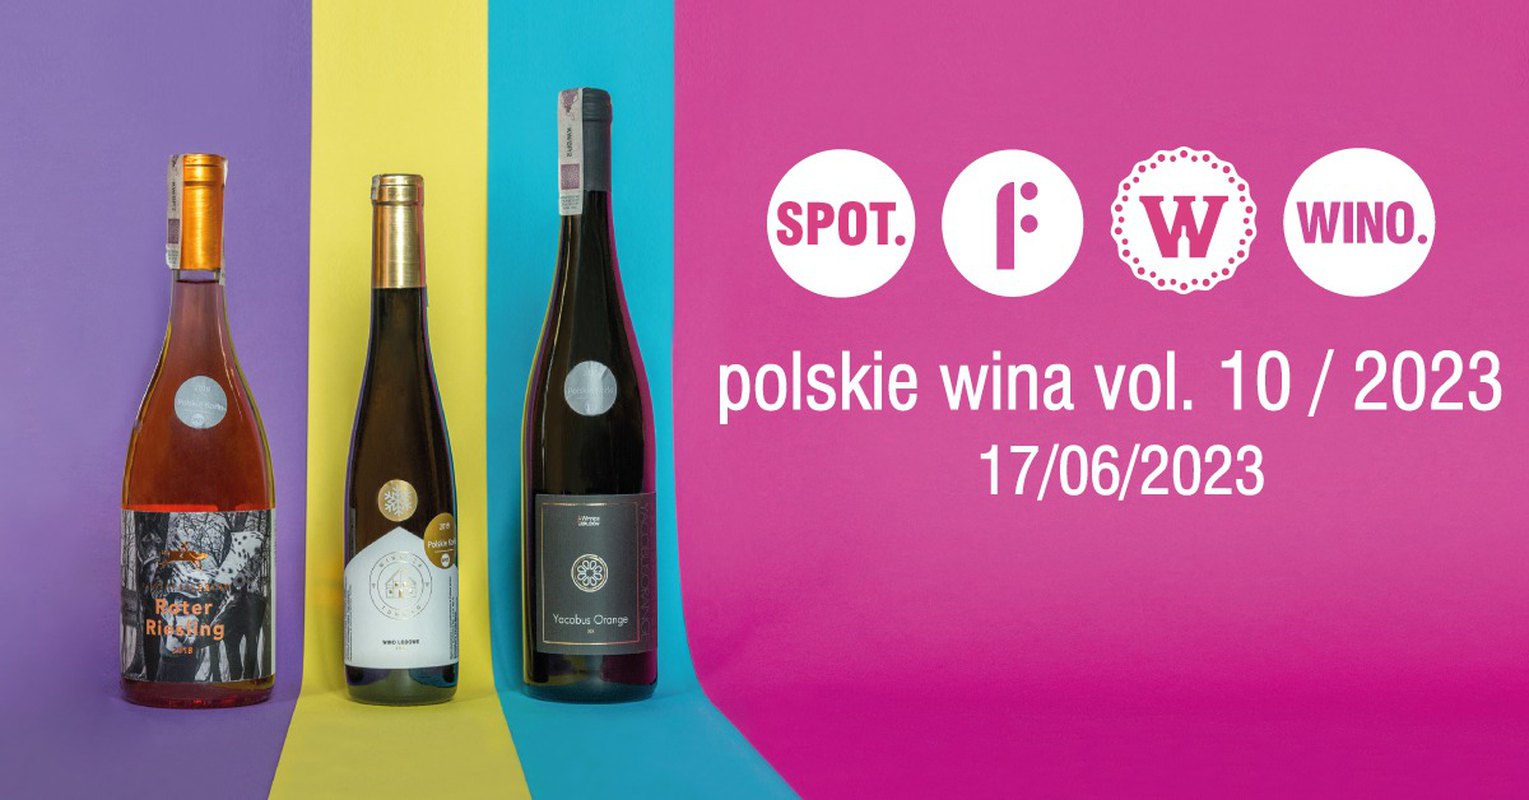 Polskie wina vol. 10 SPOT